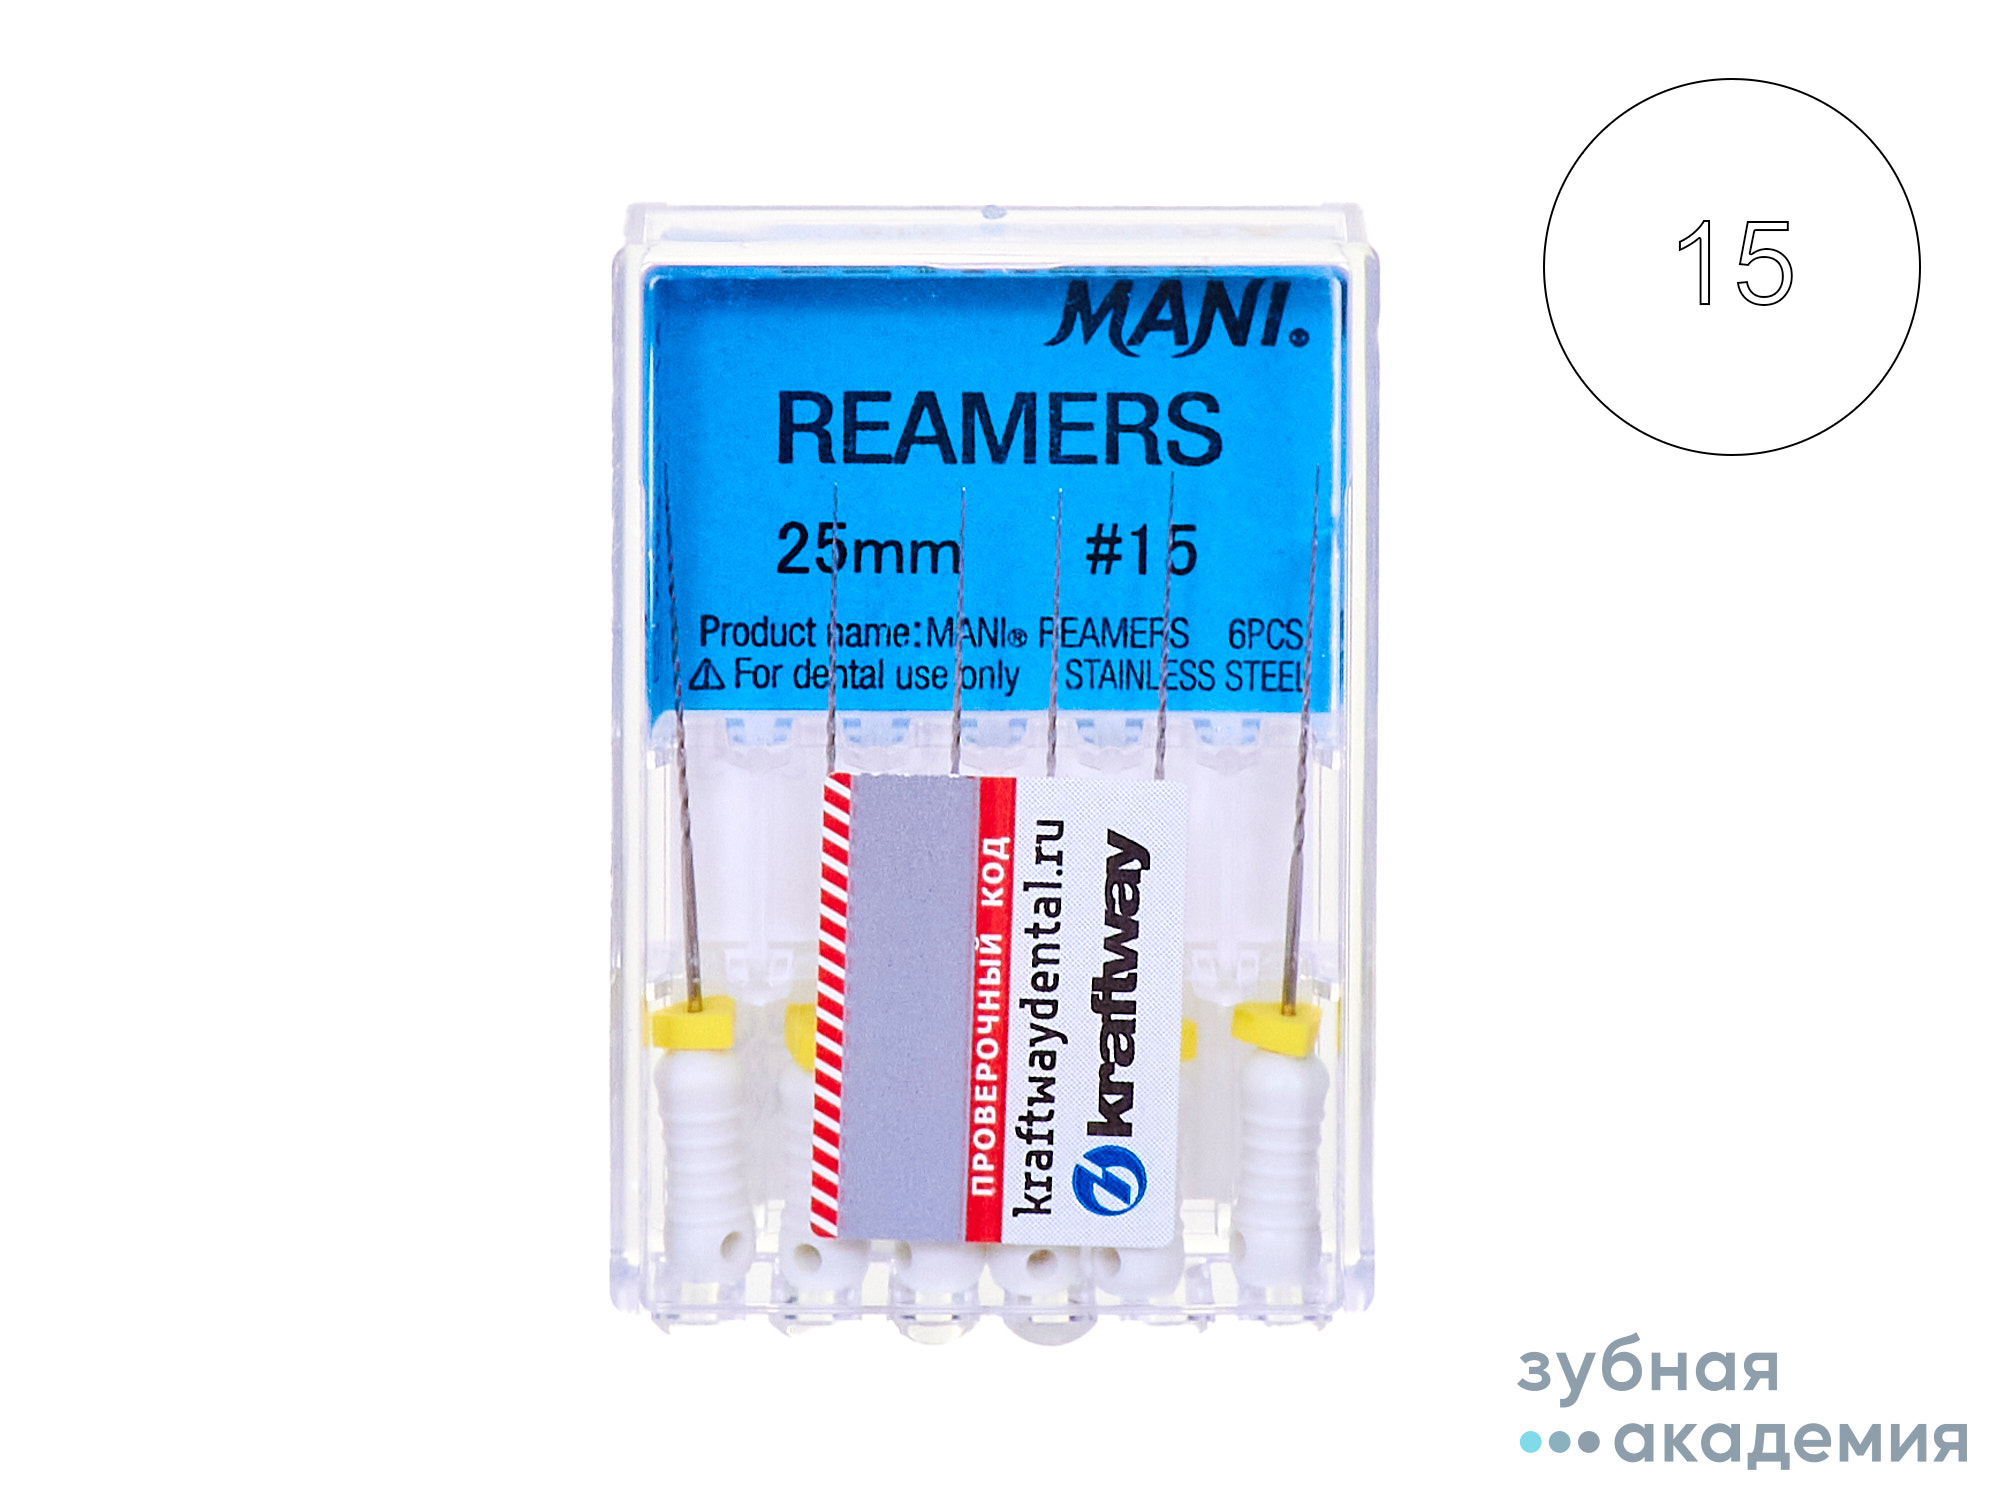 Reamers Римеры № 15 L25 упаковка 6шт  /Mani/ Япония